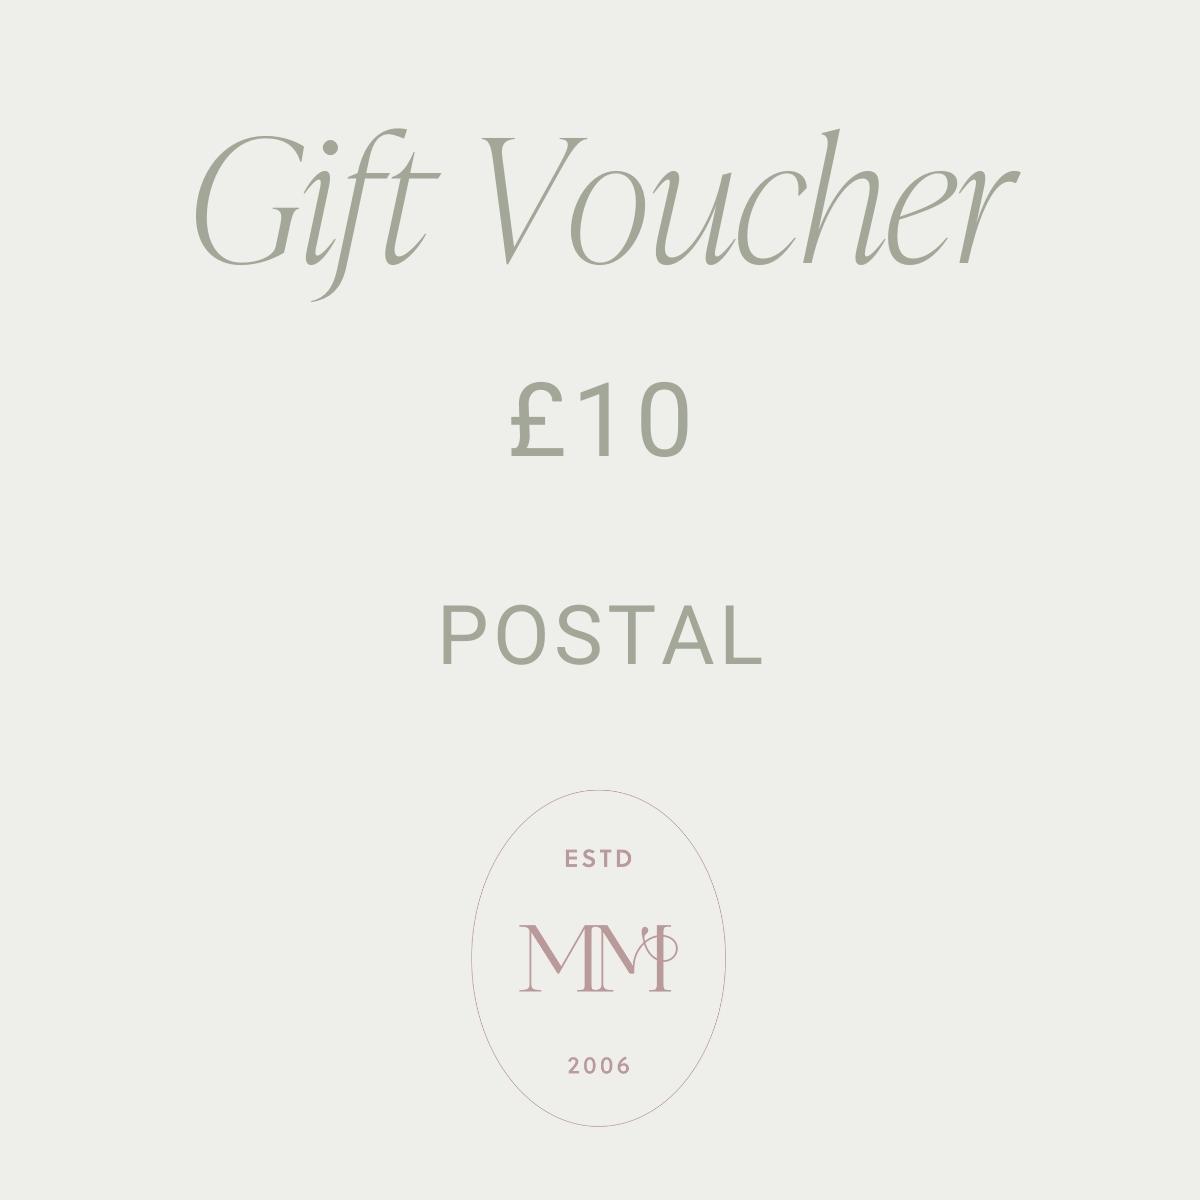 Gift Voucher £10.00 : POSTAL